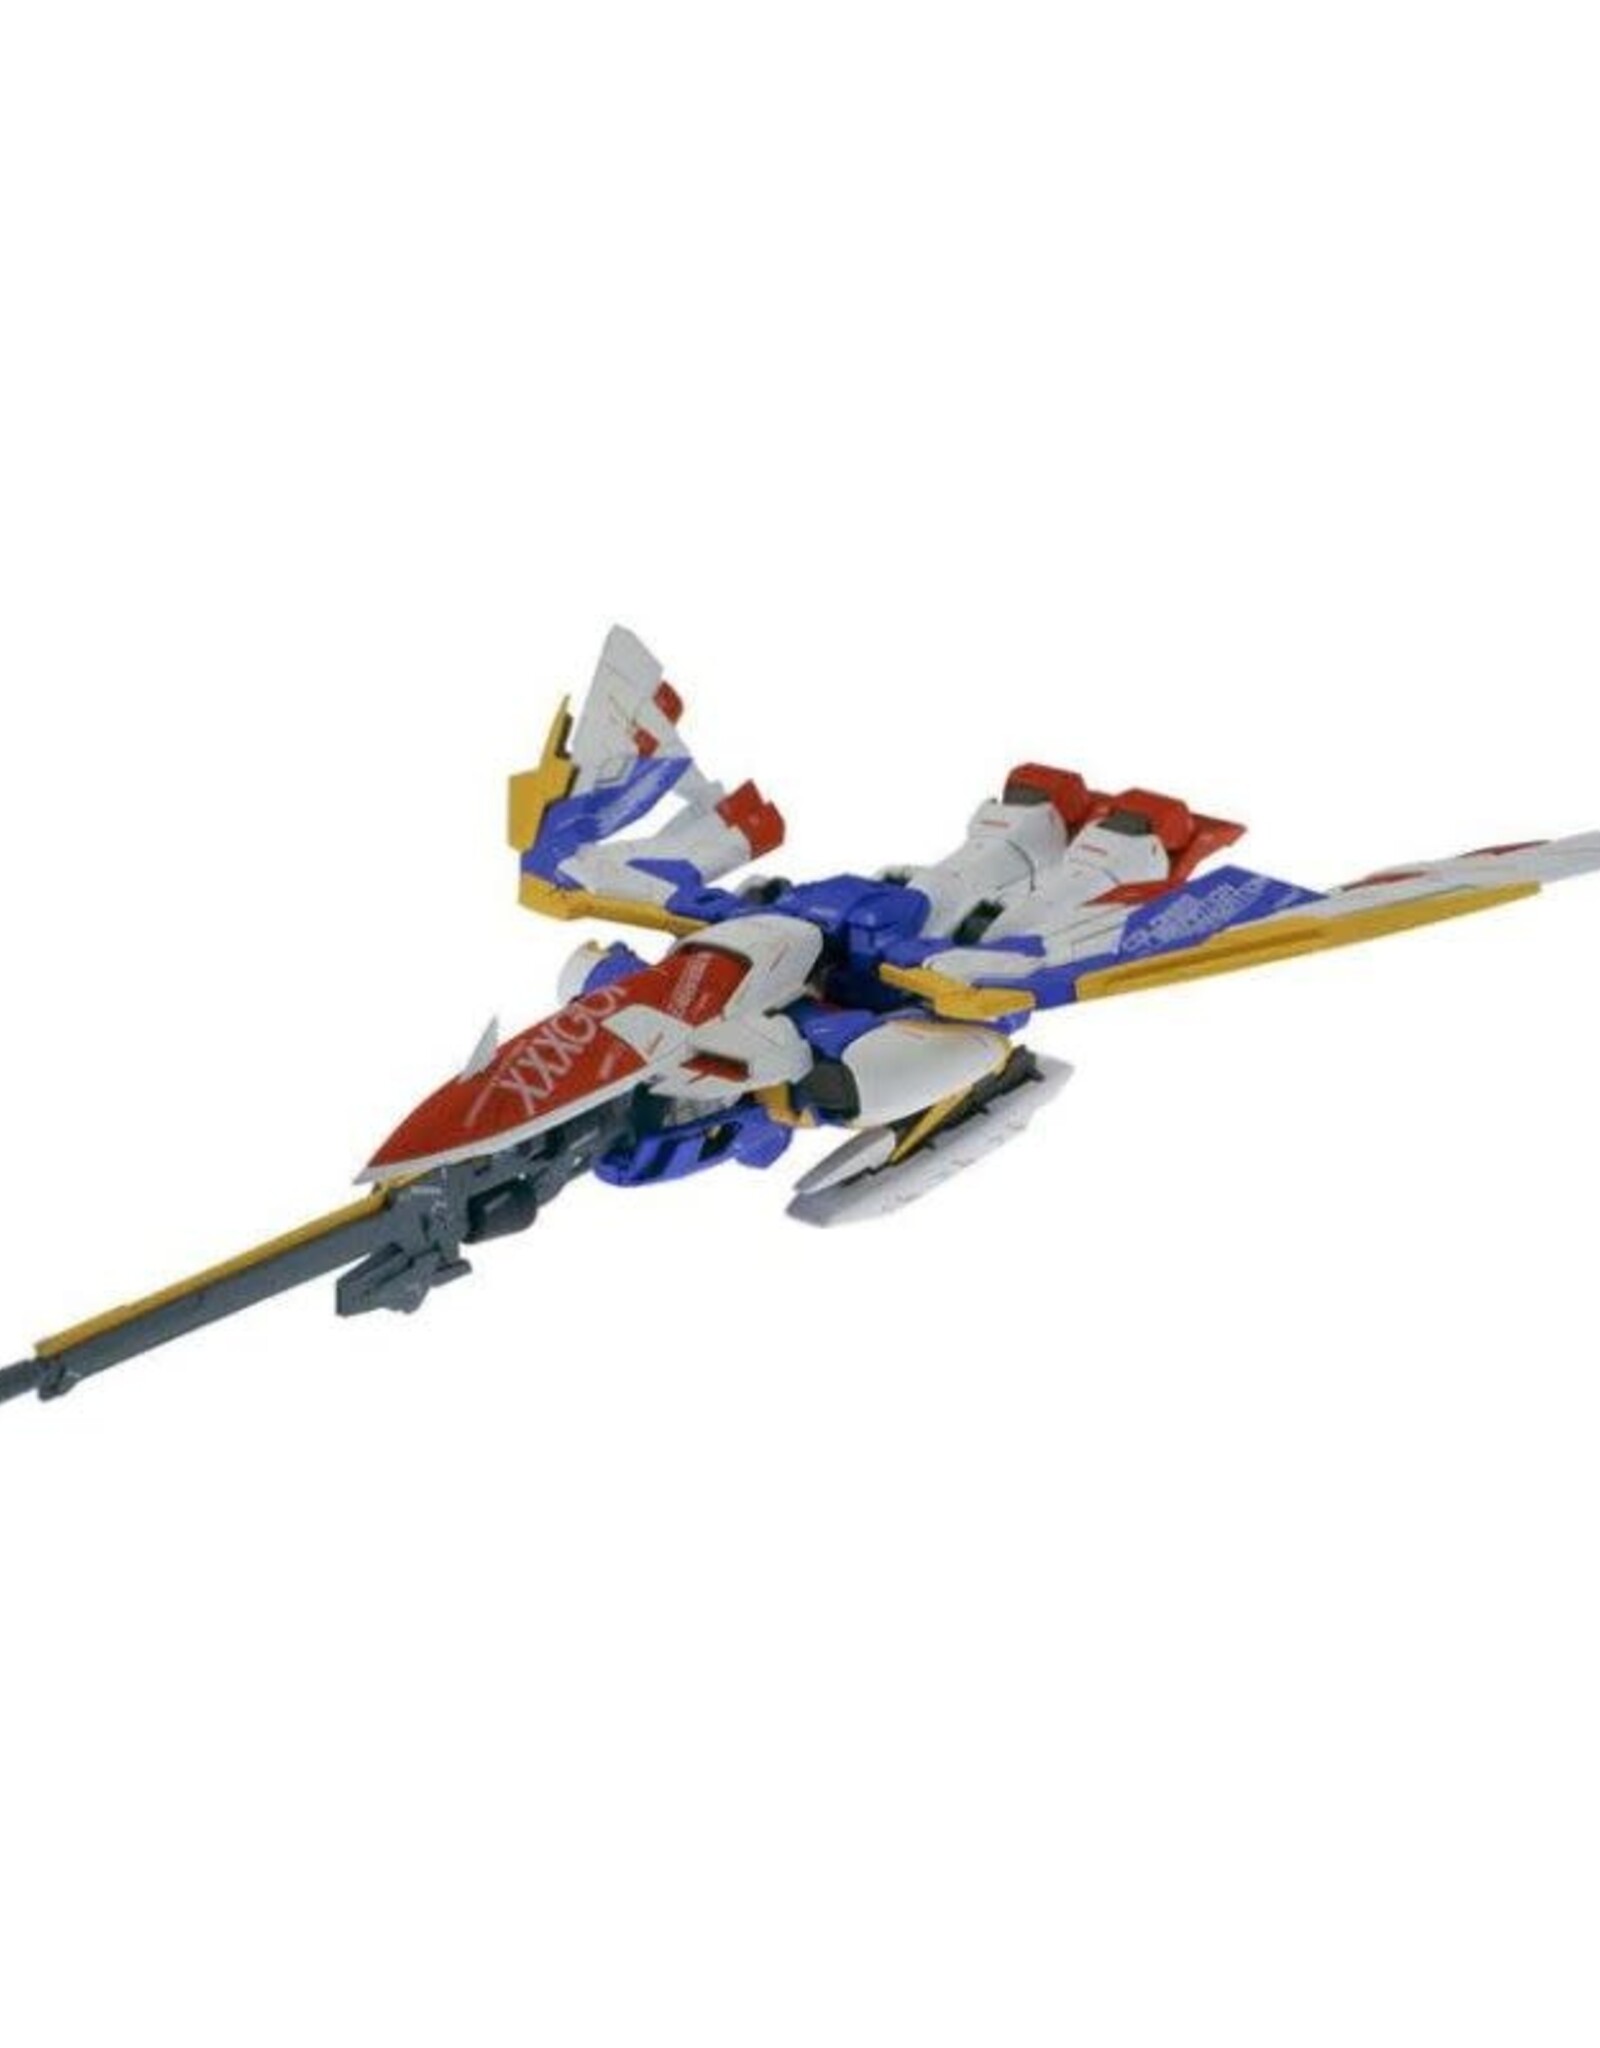 MS XXXG-01W Wing Gundam Ver.Ka. MG